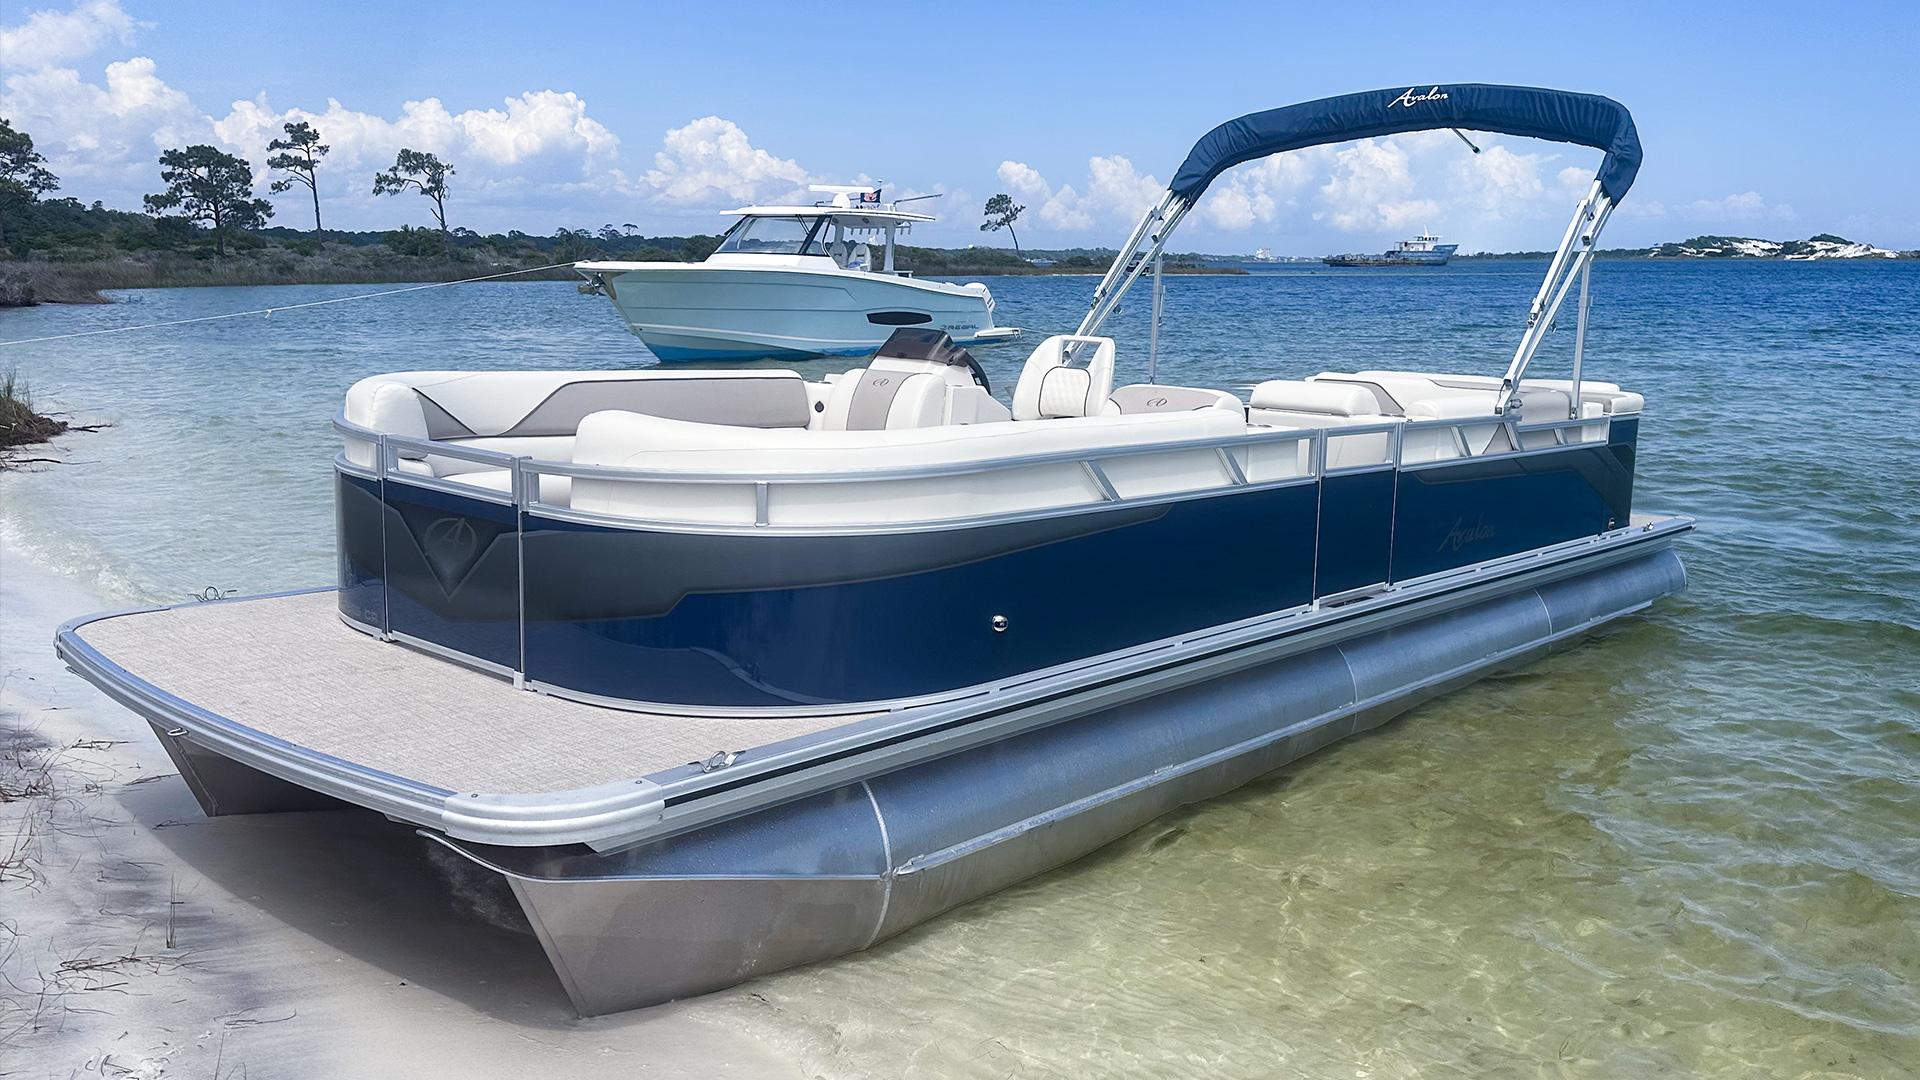 A blue Avalon Pontoon boat beached on a sandy shoreline in Navarre, Florida